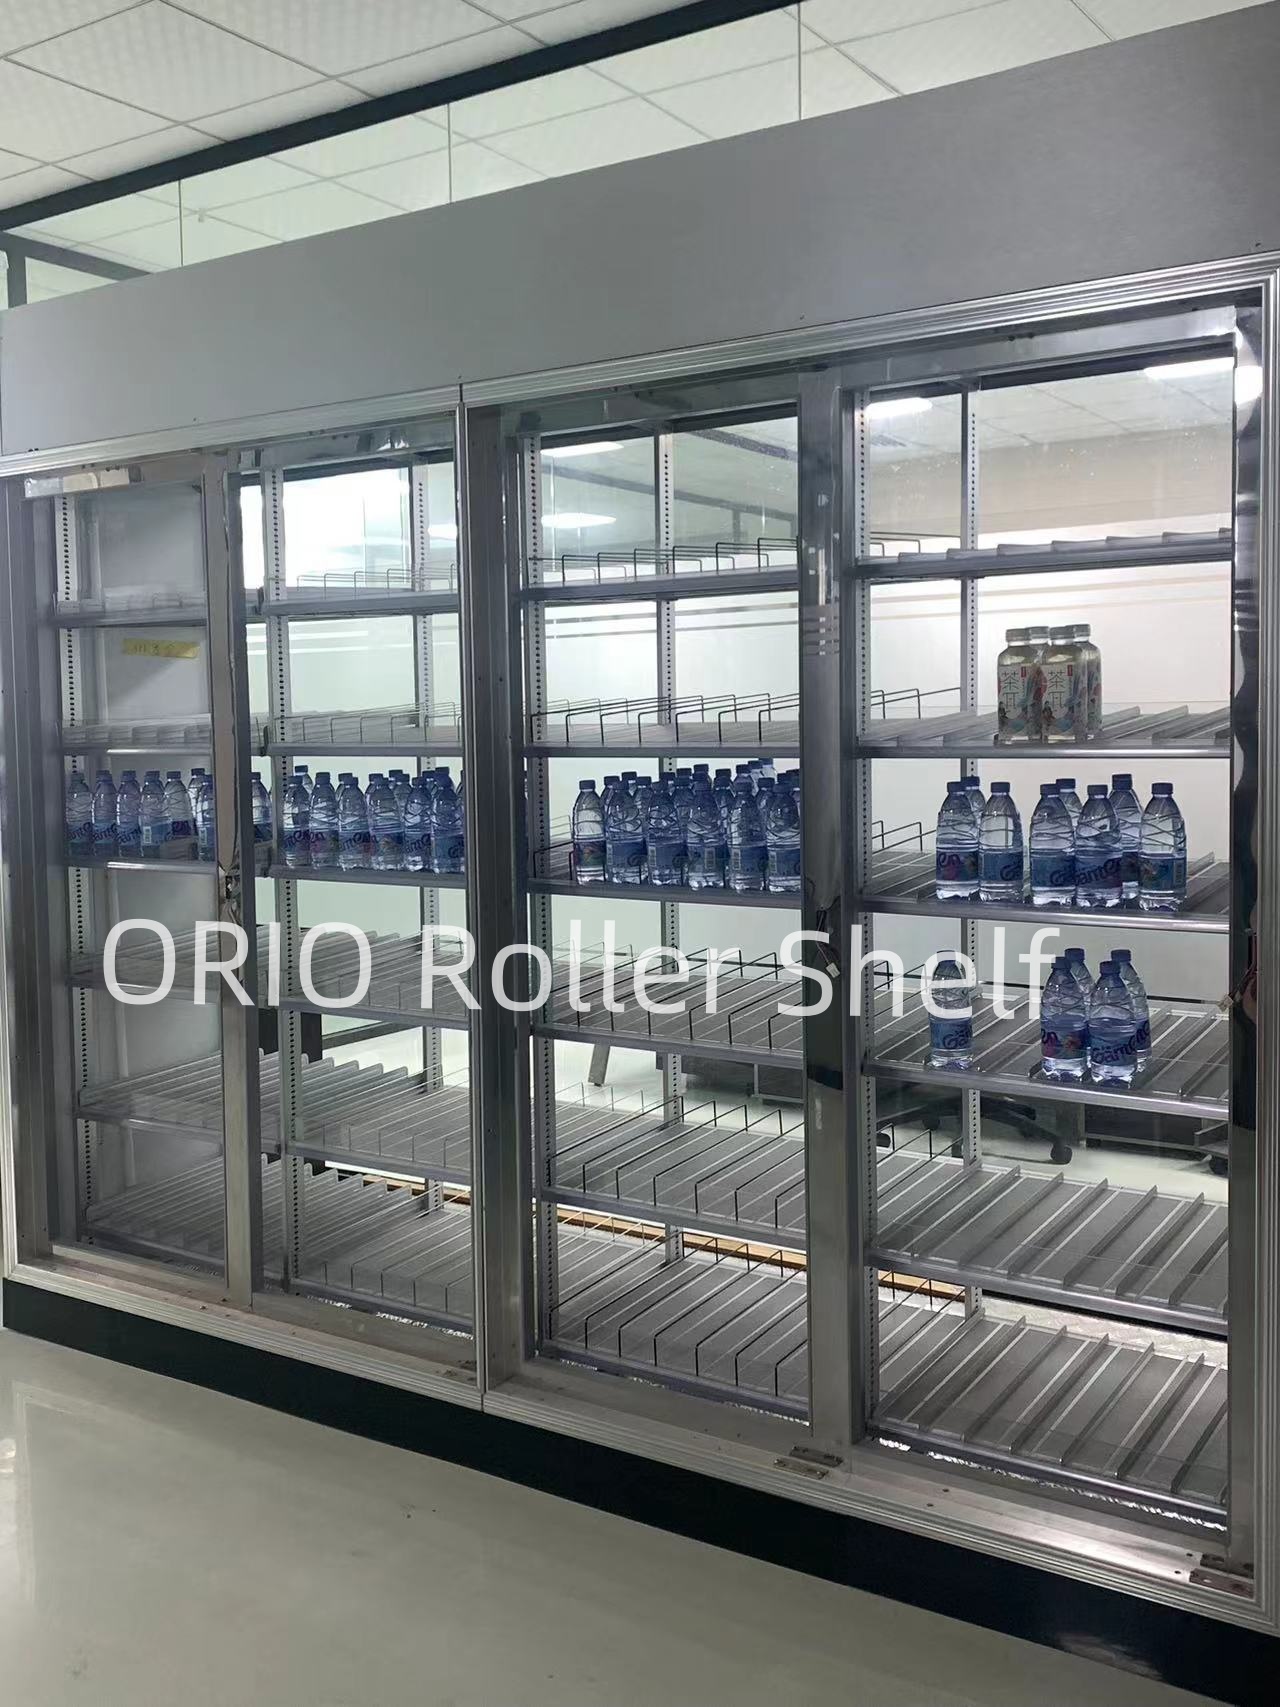 Introducing the Revolutionary Roller Shelf for Cooler Shelves